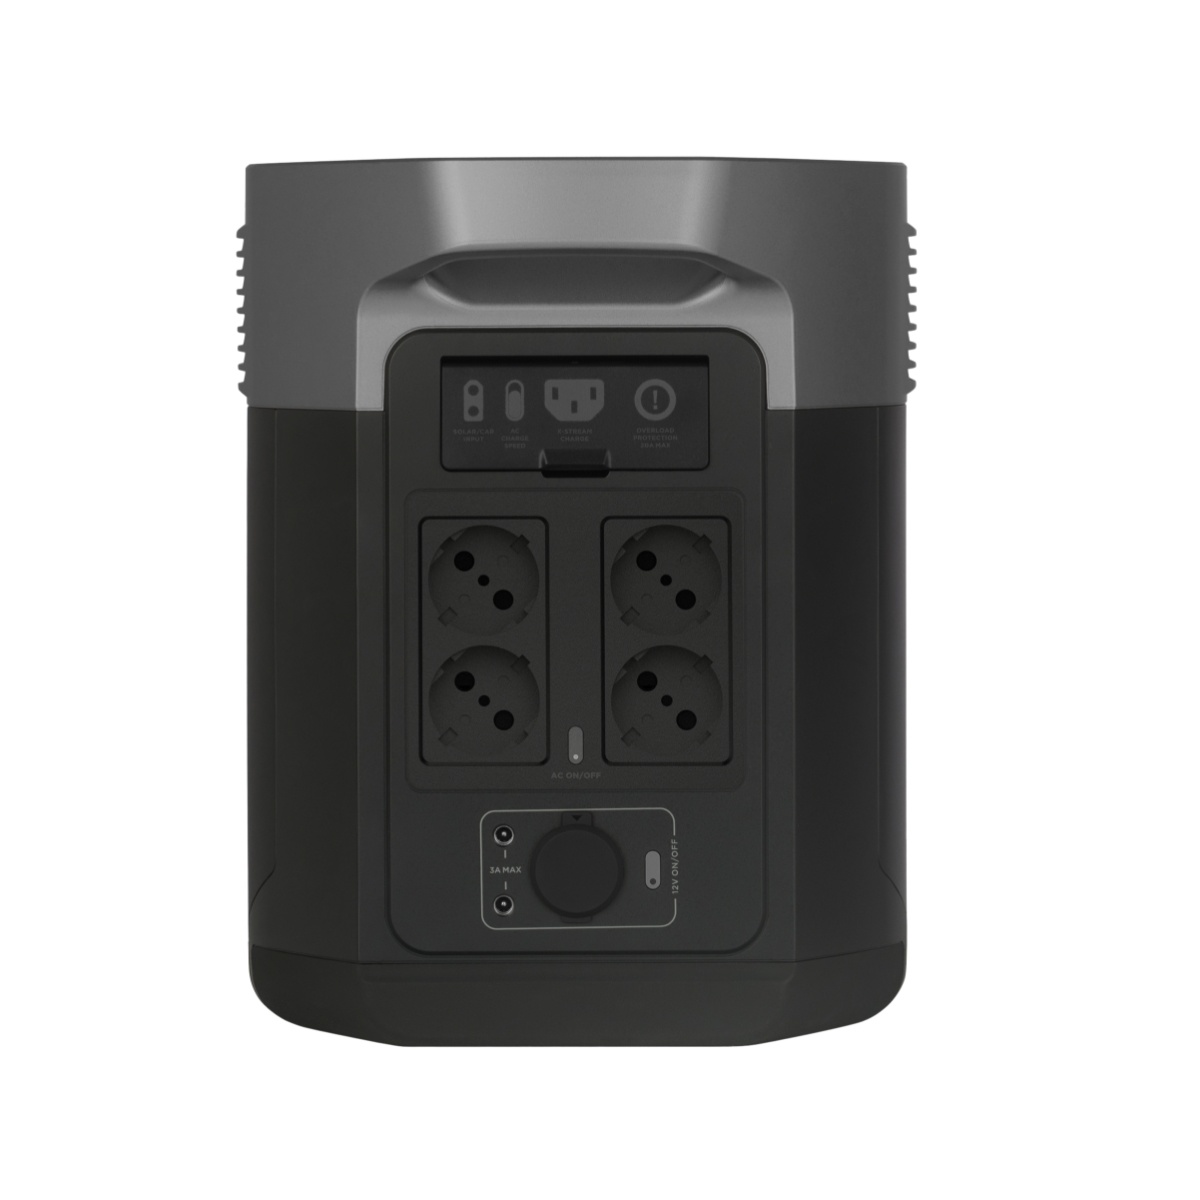 DELTA Max Powerstation inkl. Schnellladekabel USB-Ladekabel für Smartphones